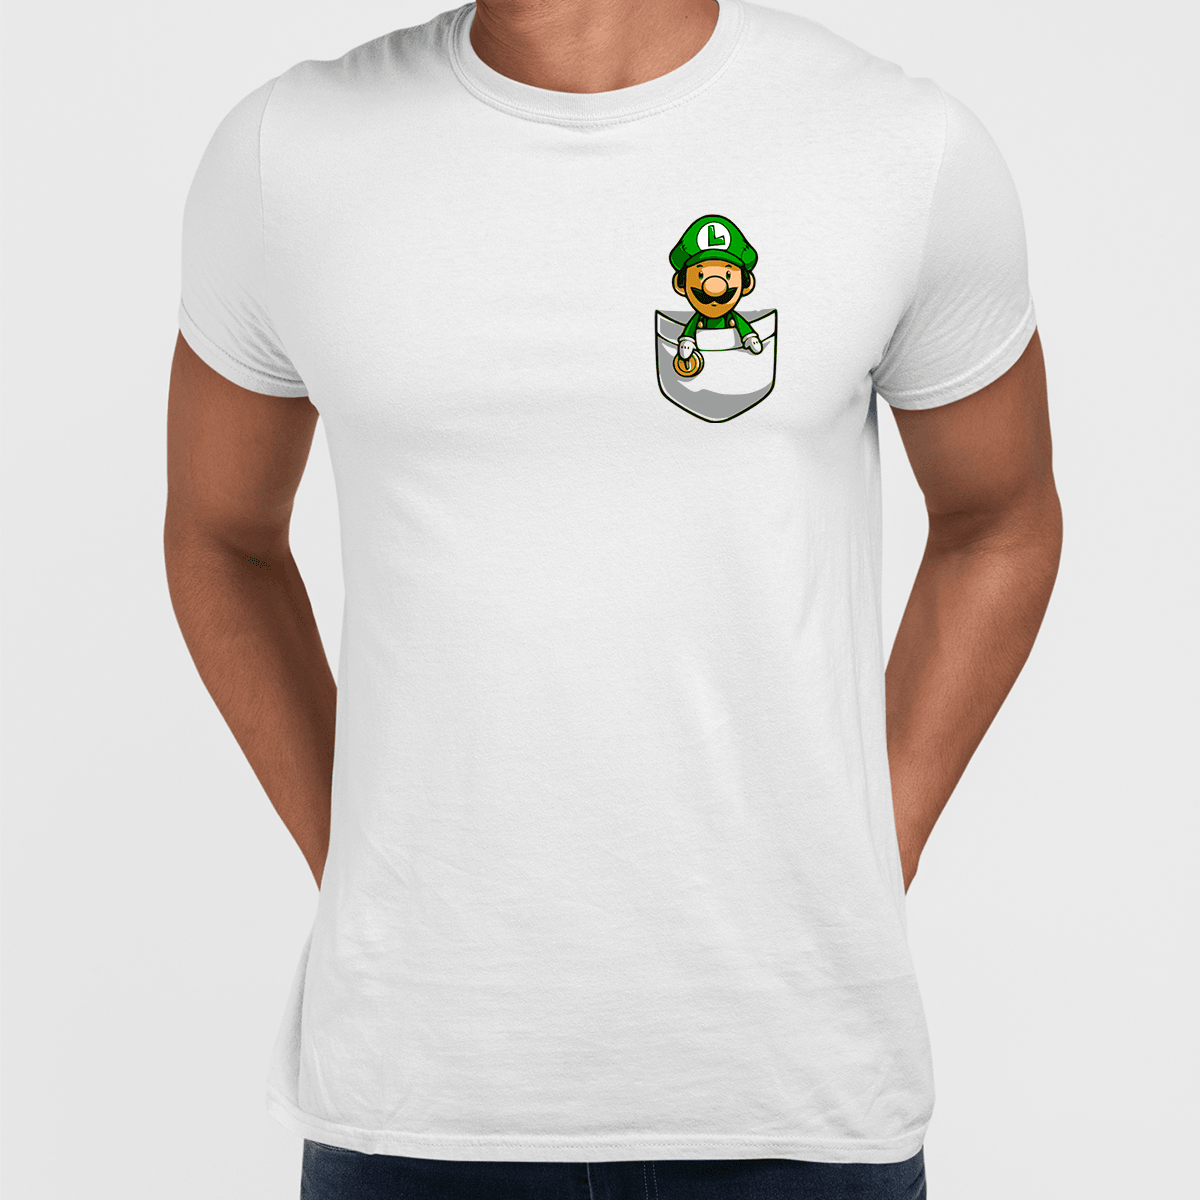 Cute Mario Bros Luigi in the pocket Tee Nintendo SNES for All retro Minds - Kuzi Tees